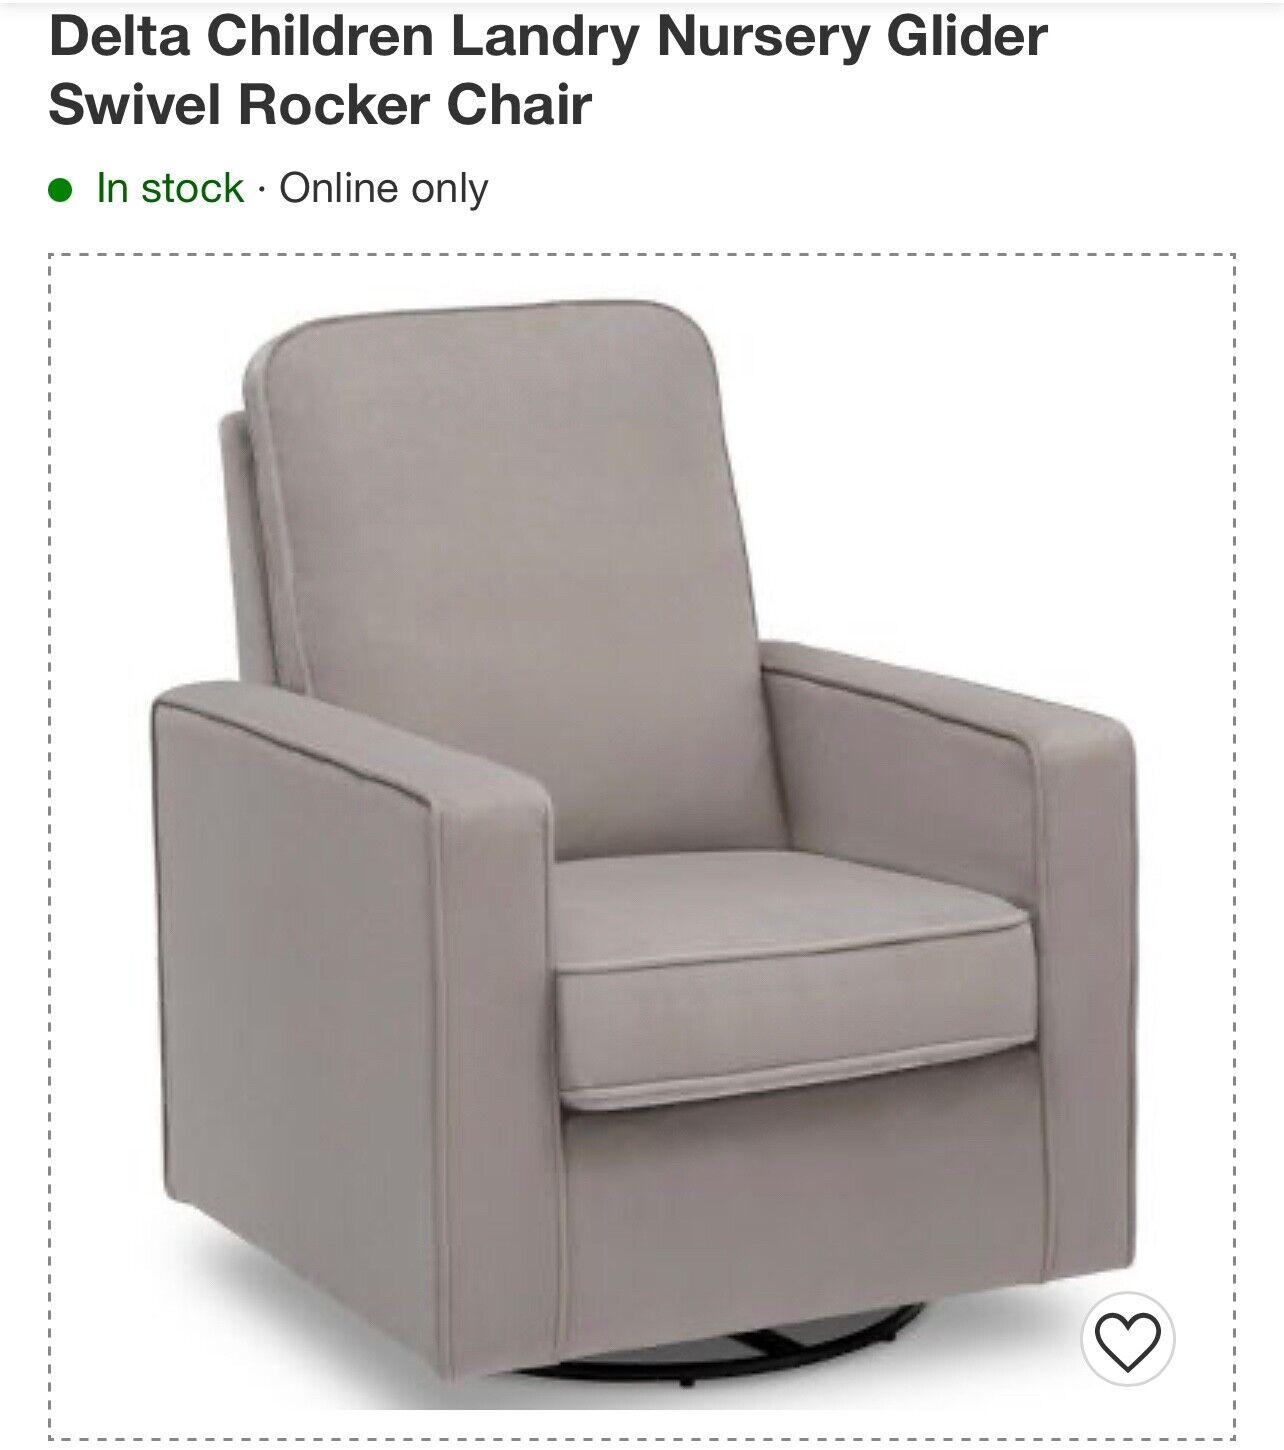 Swivel Rocking Chair Nursery